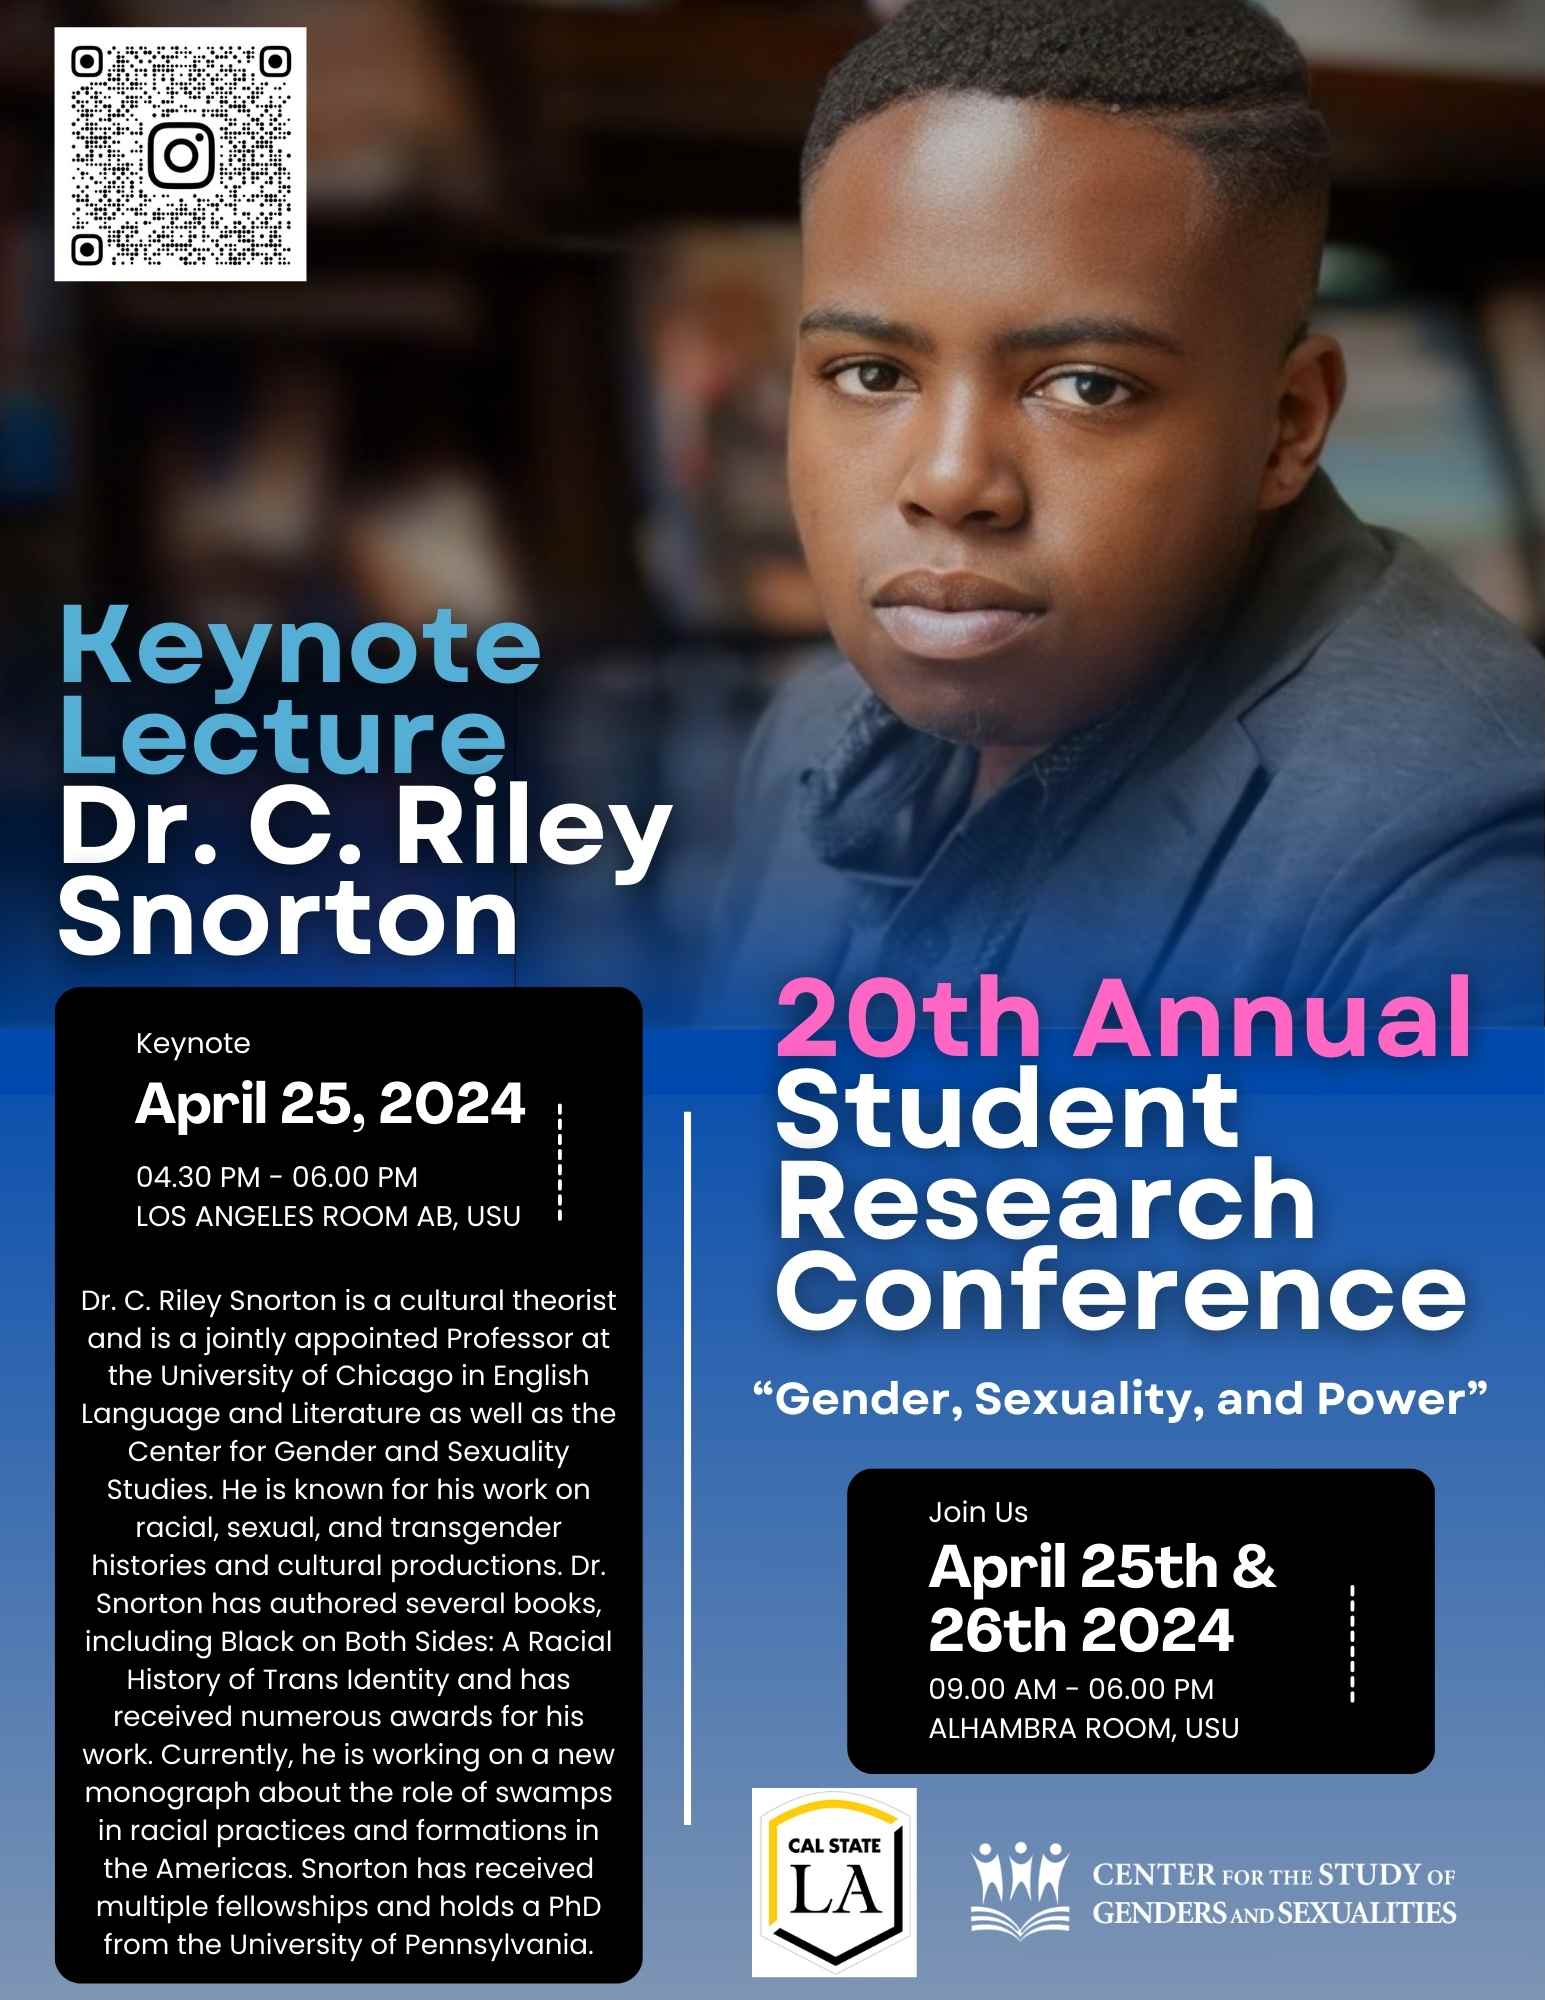 CSGS Conference Keynote Speaker - Dr. C. Riley Snorton